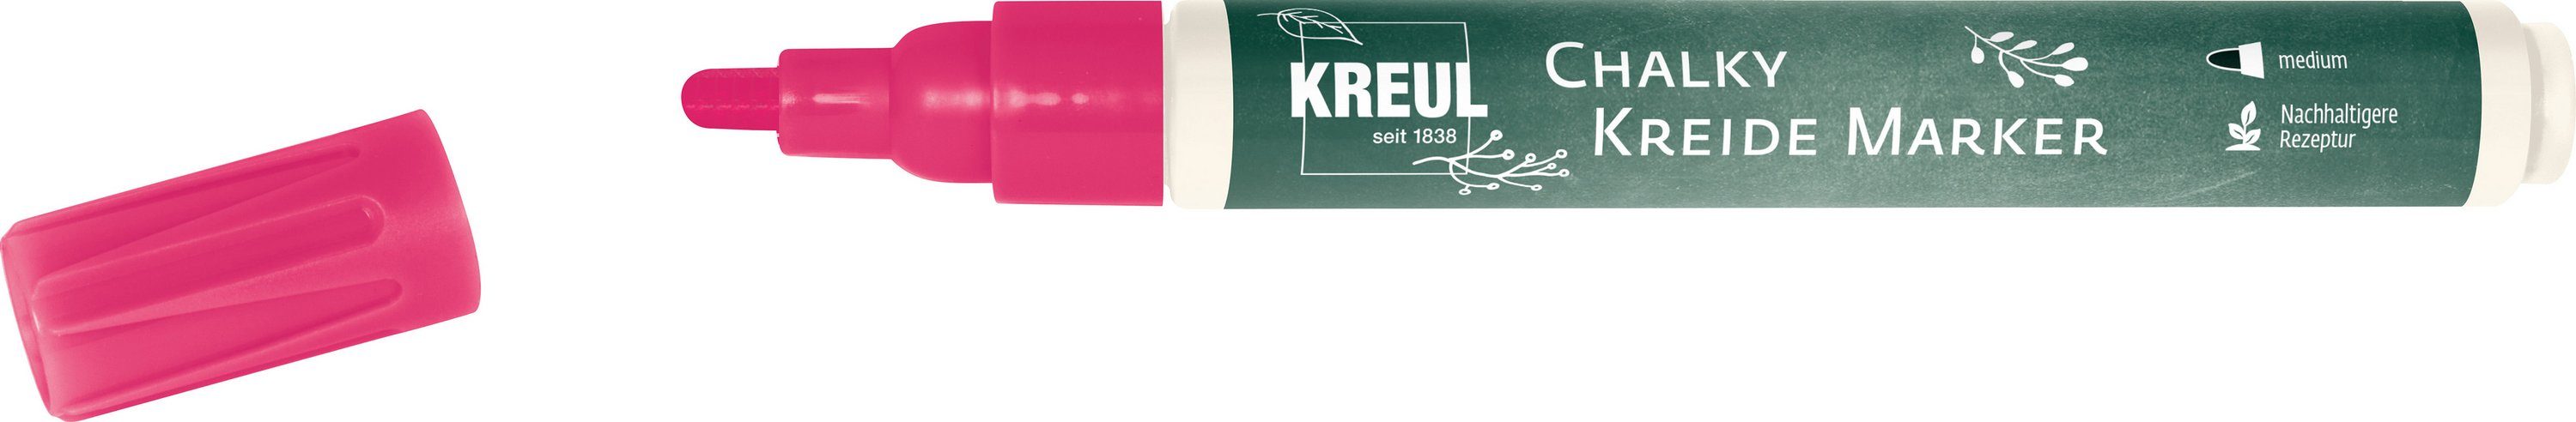 Kreul Kreidemarker Chalky, 2-3mm Neon-Pink Strichstärke